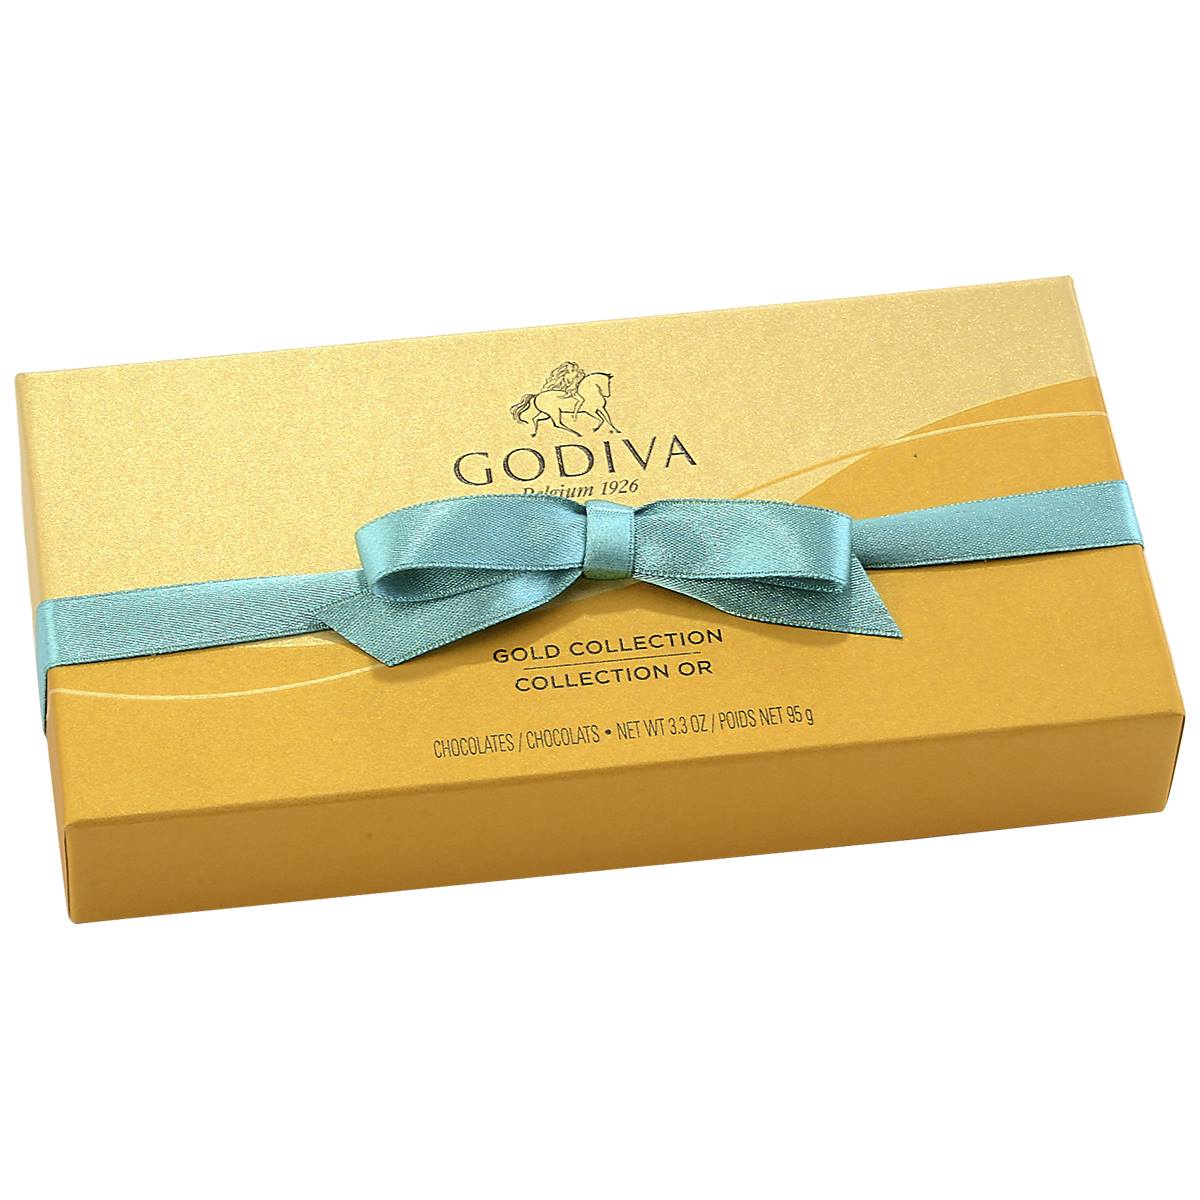 Godiva 8pc. Chocolate Spring Ballotin Box